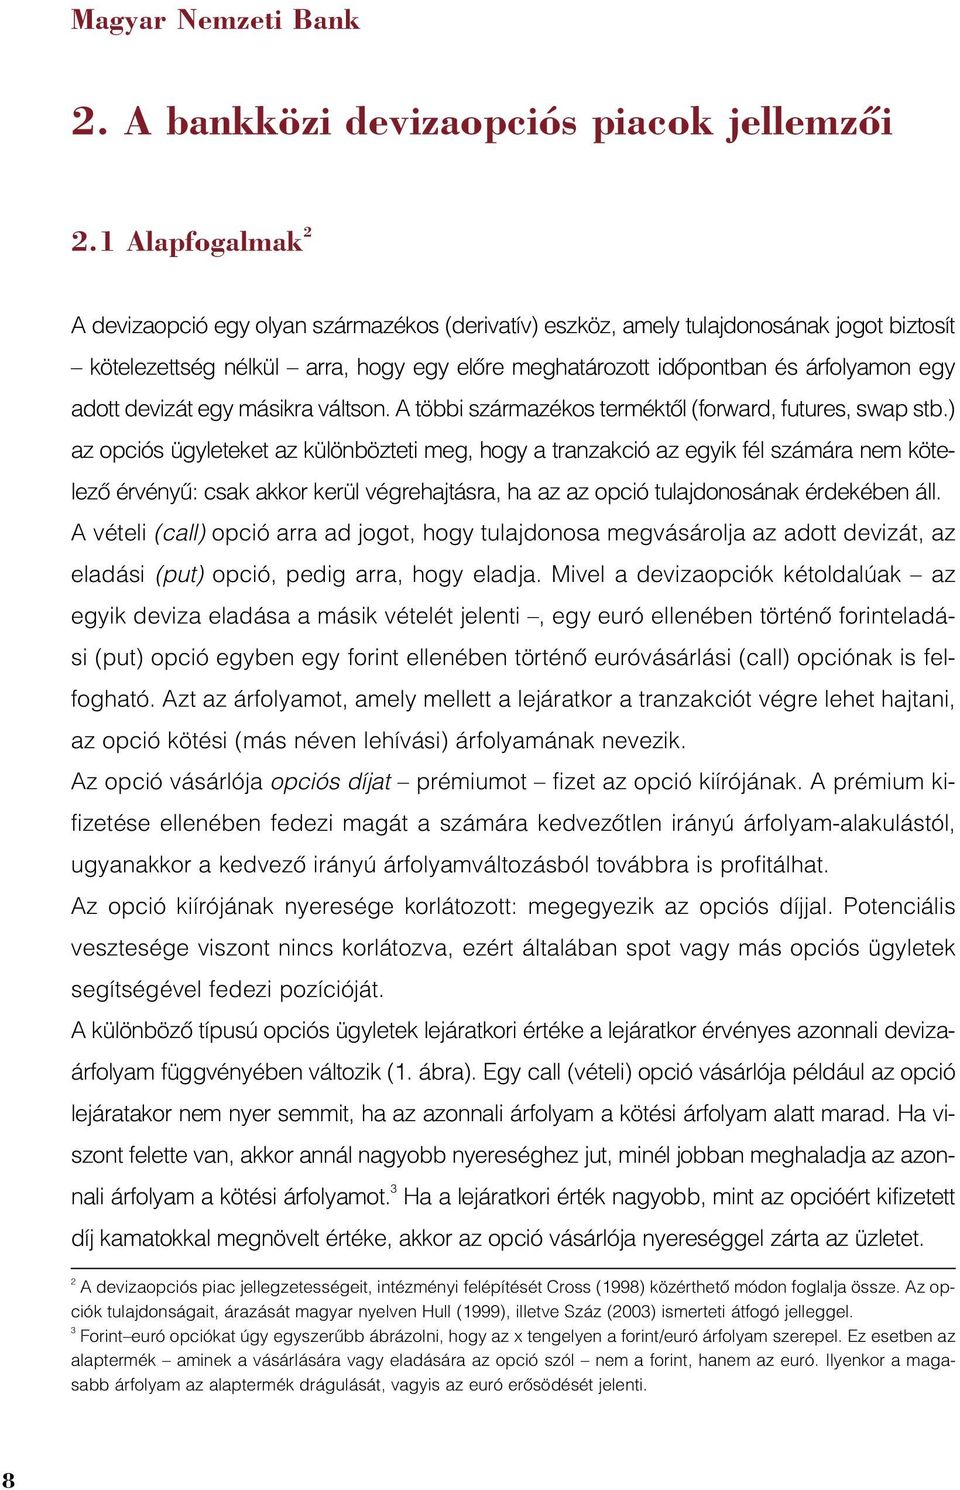 Hagyományos és egzotikus opciók a magyar devizapiacon - PDF Free Download